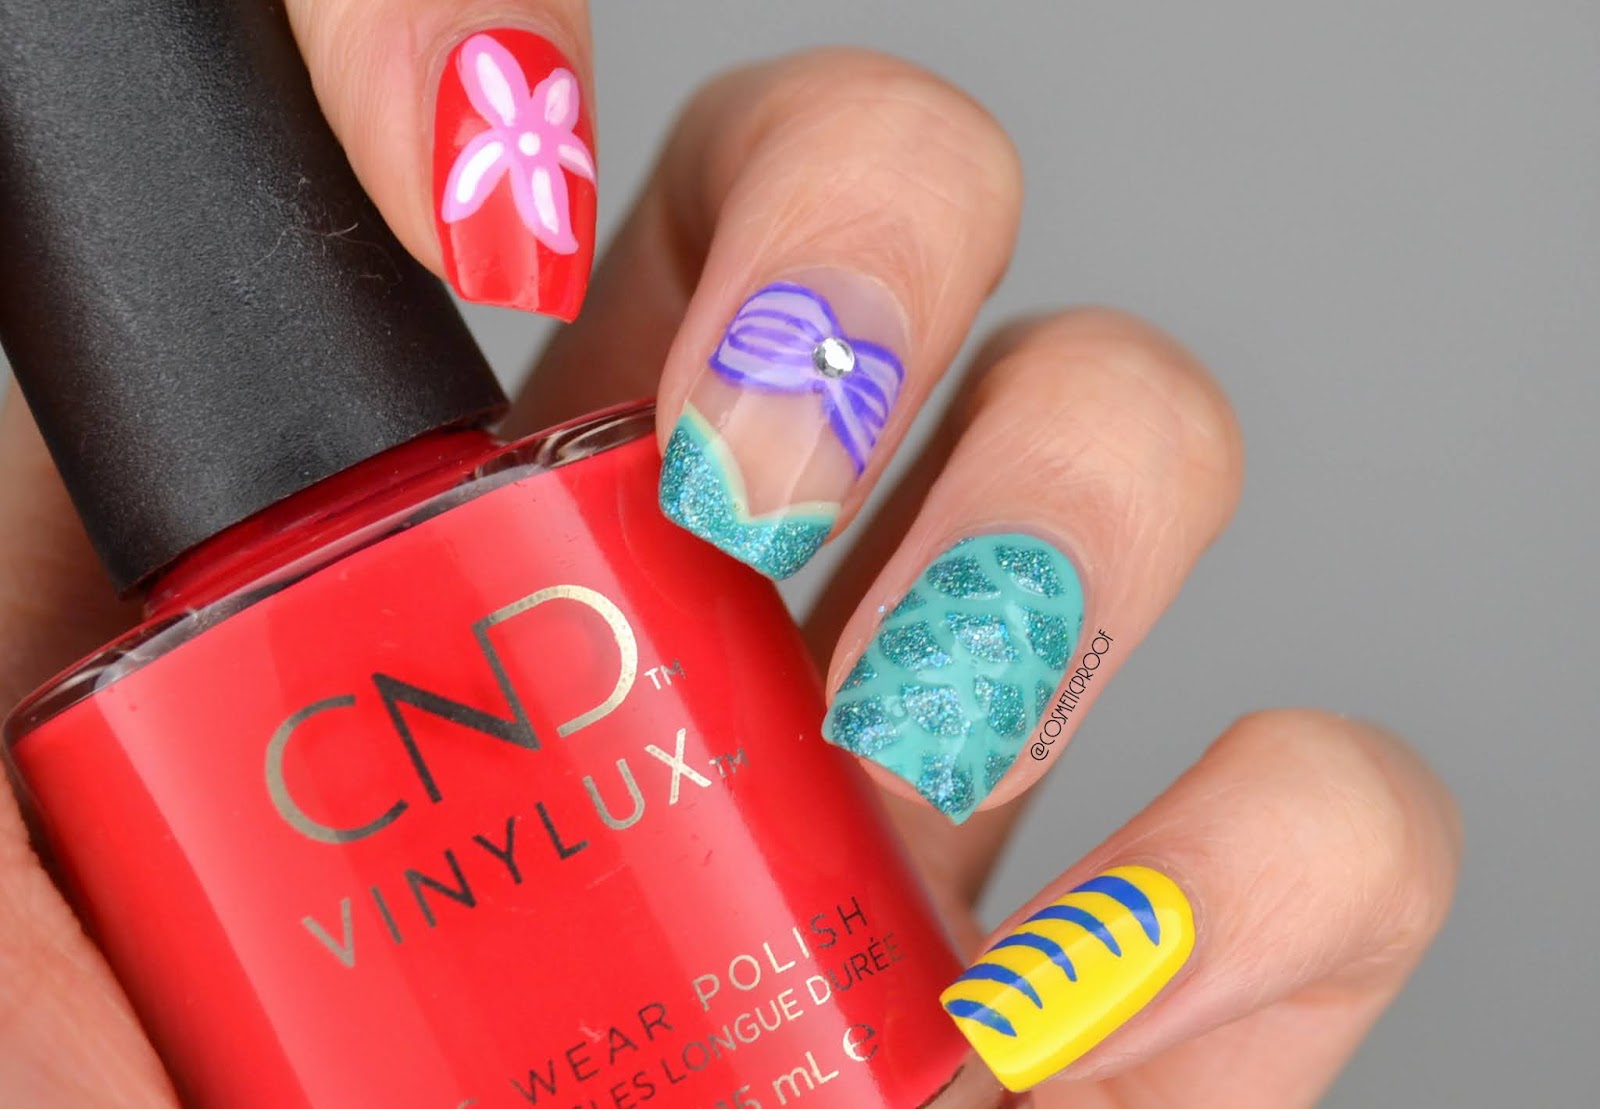 3. Mermaid Inspired Nail Design - wide 6